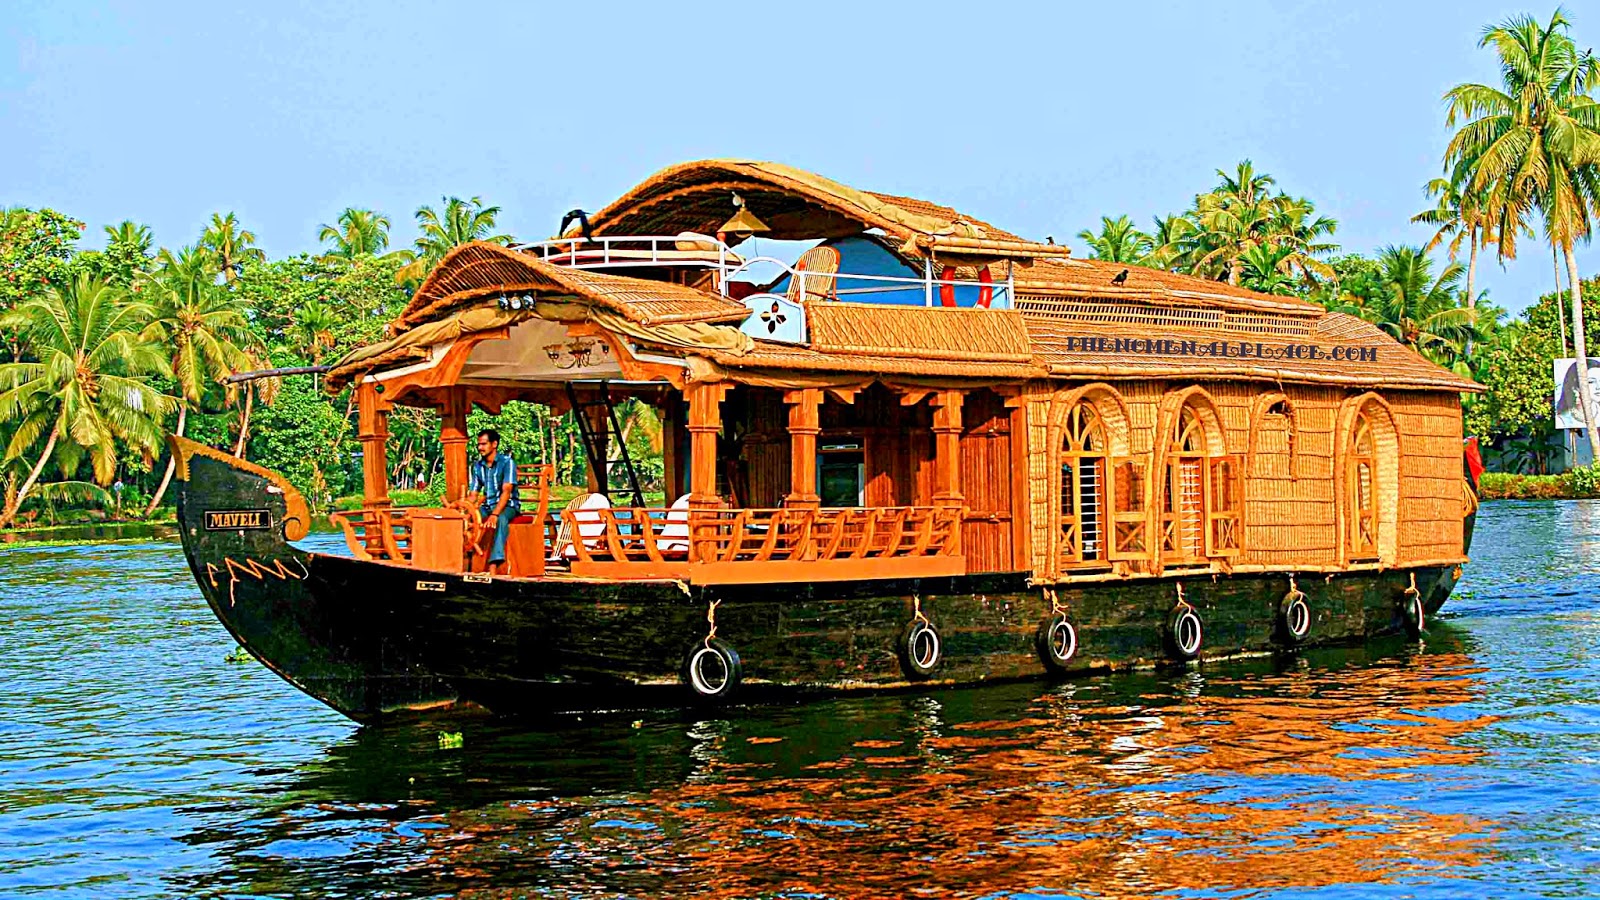 serene southern backwaters of kerala – a tour from kollam